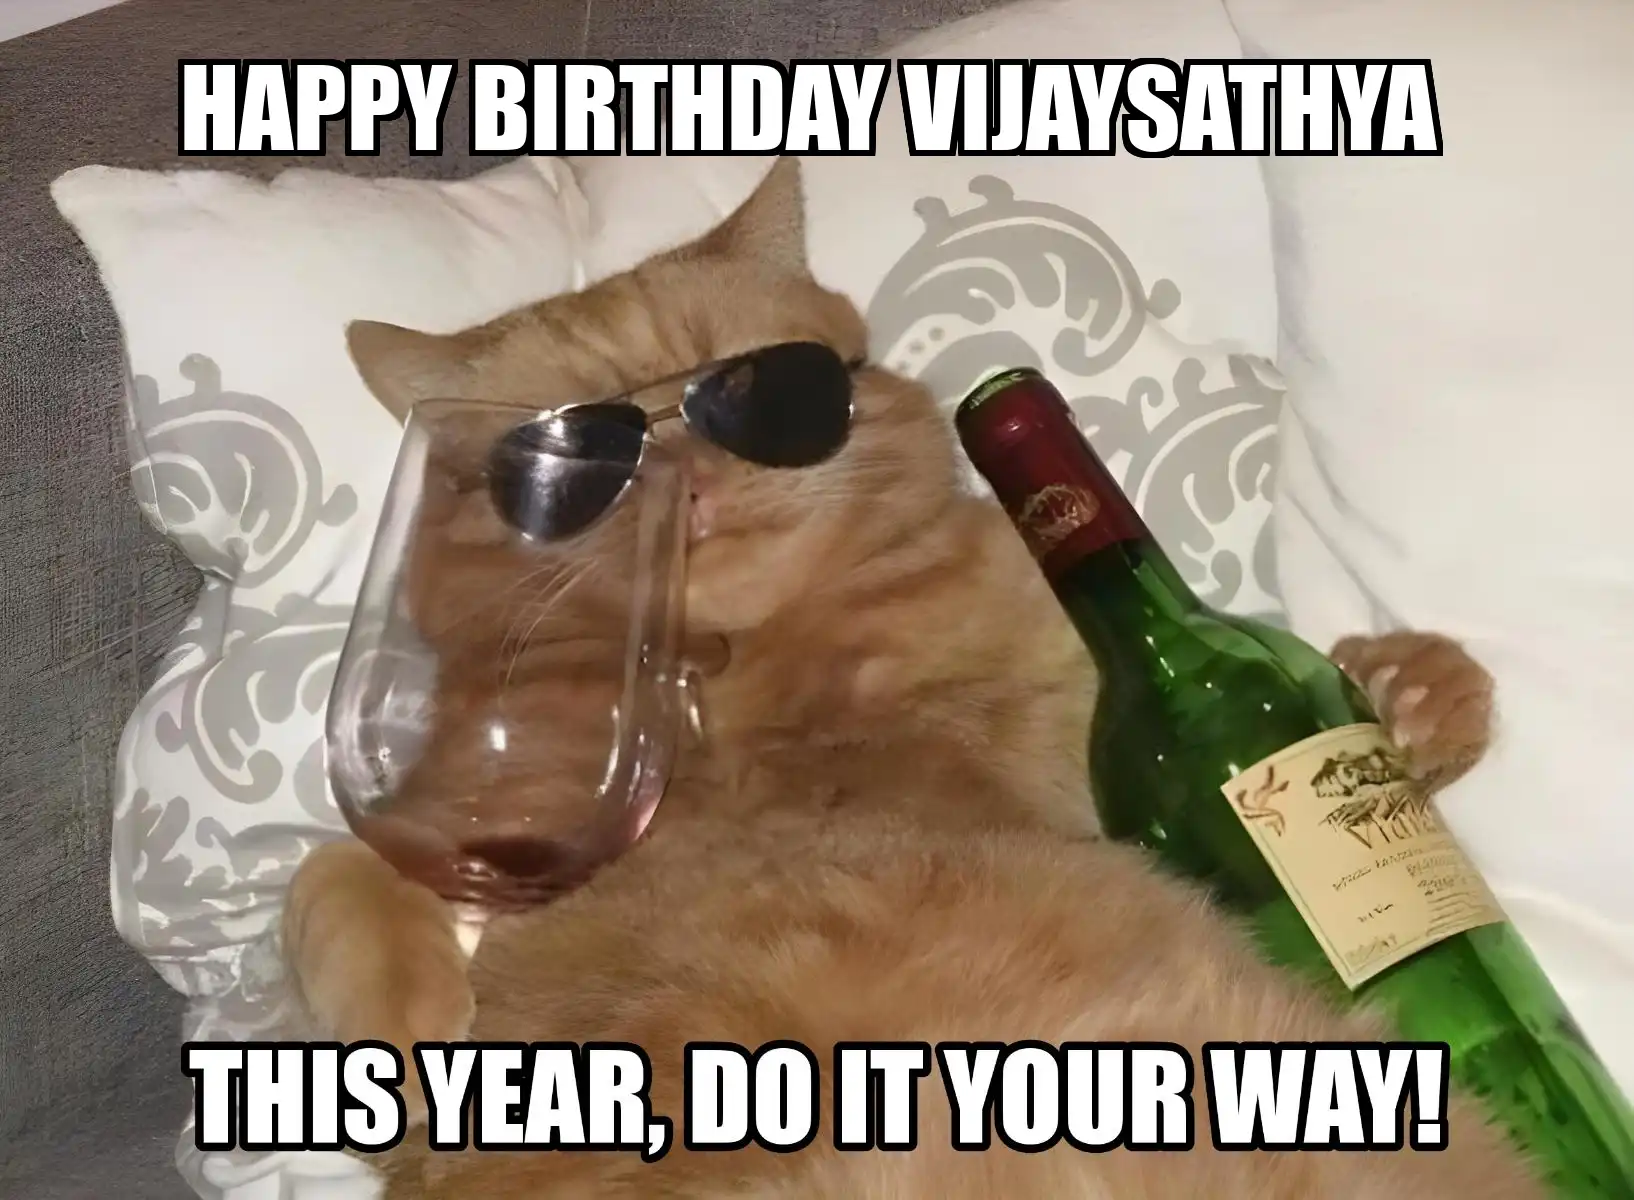 Happy Birthday Vijaysathya This Year Do It Your Way Meme